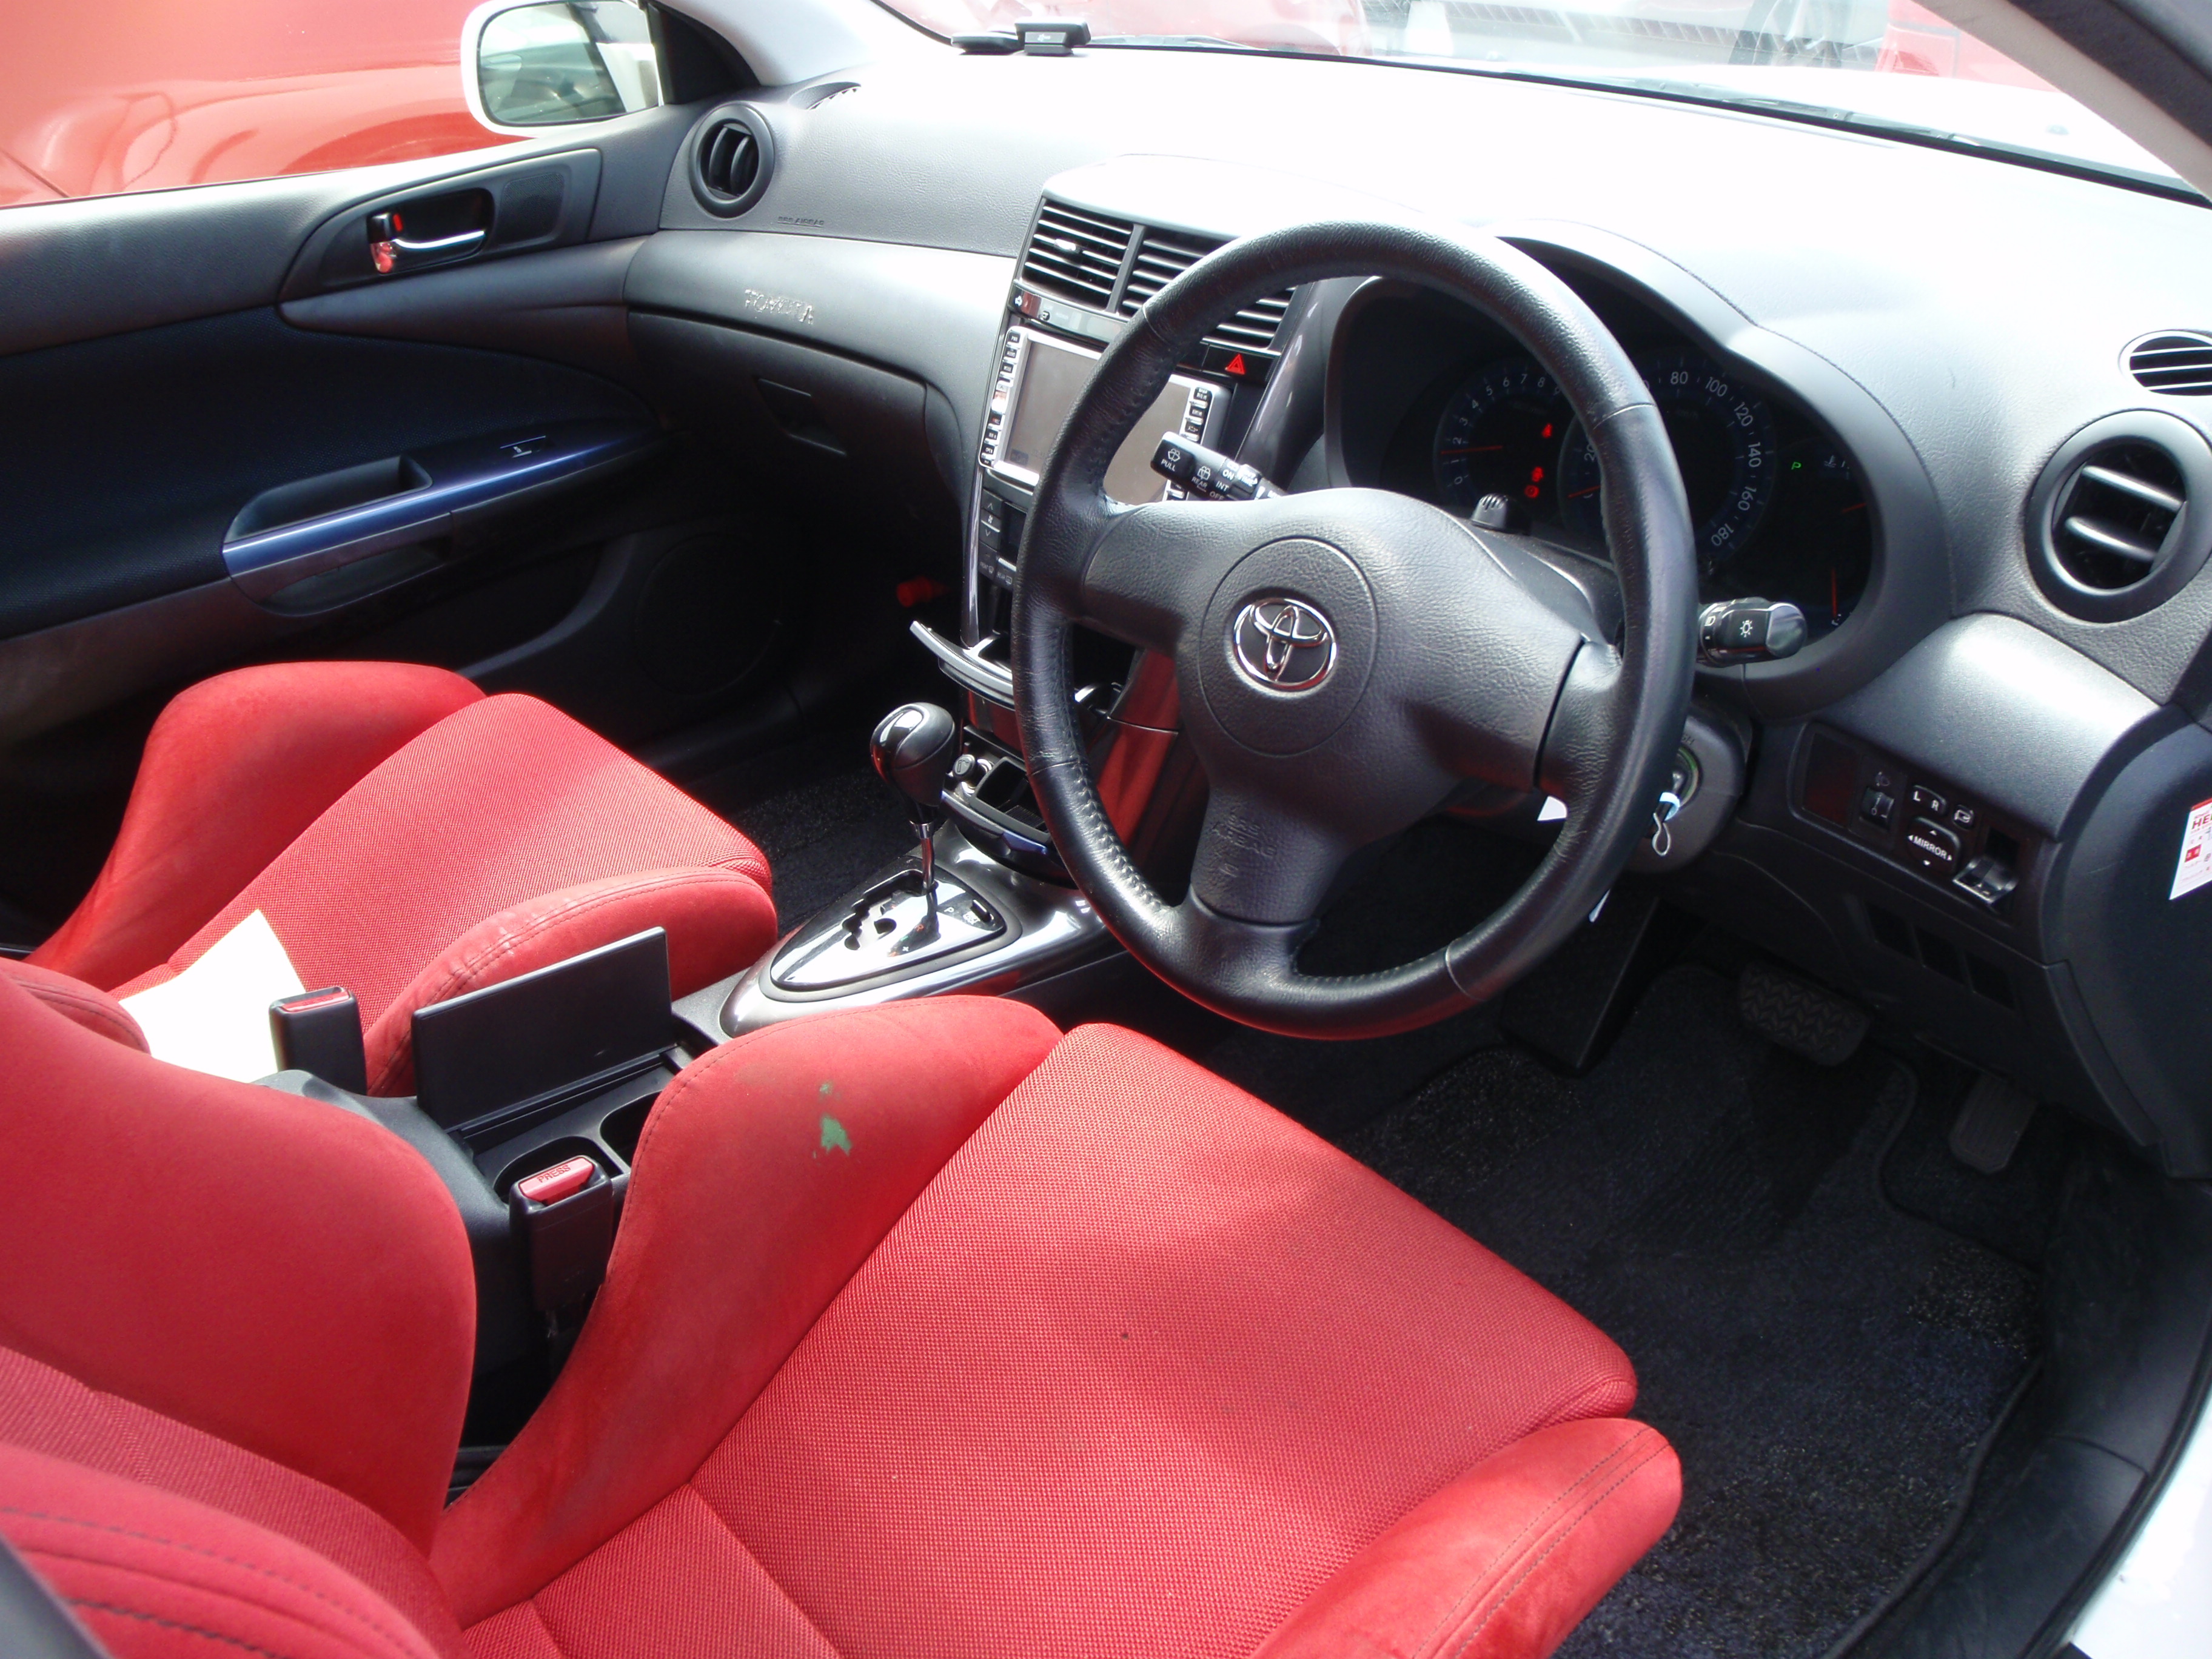 2003 Toyota Caldina GT-FOUR 2L 4WD turbo interior